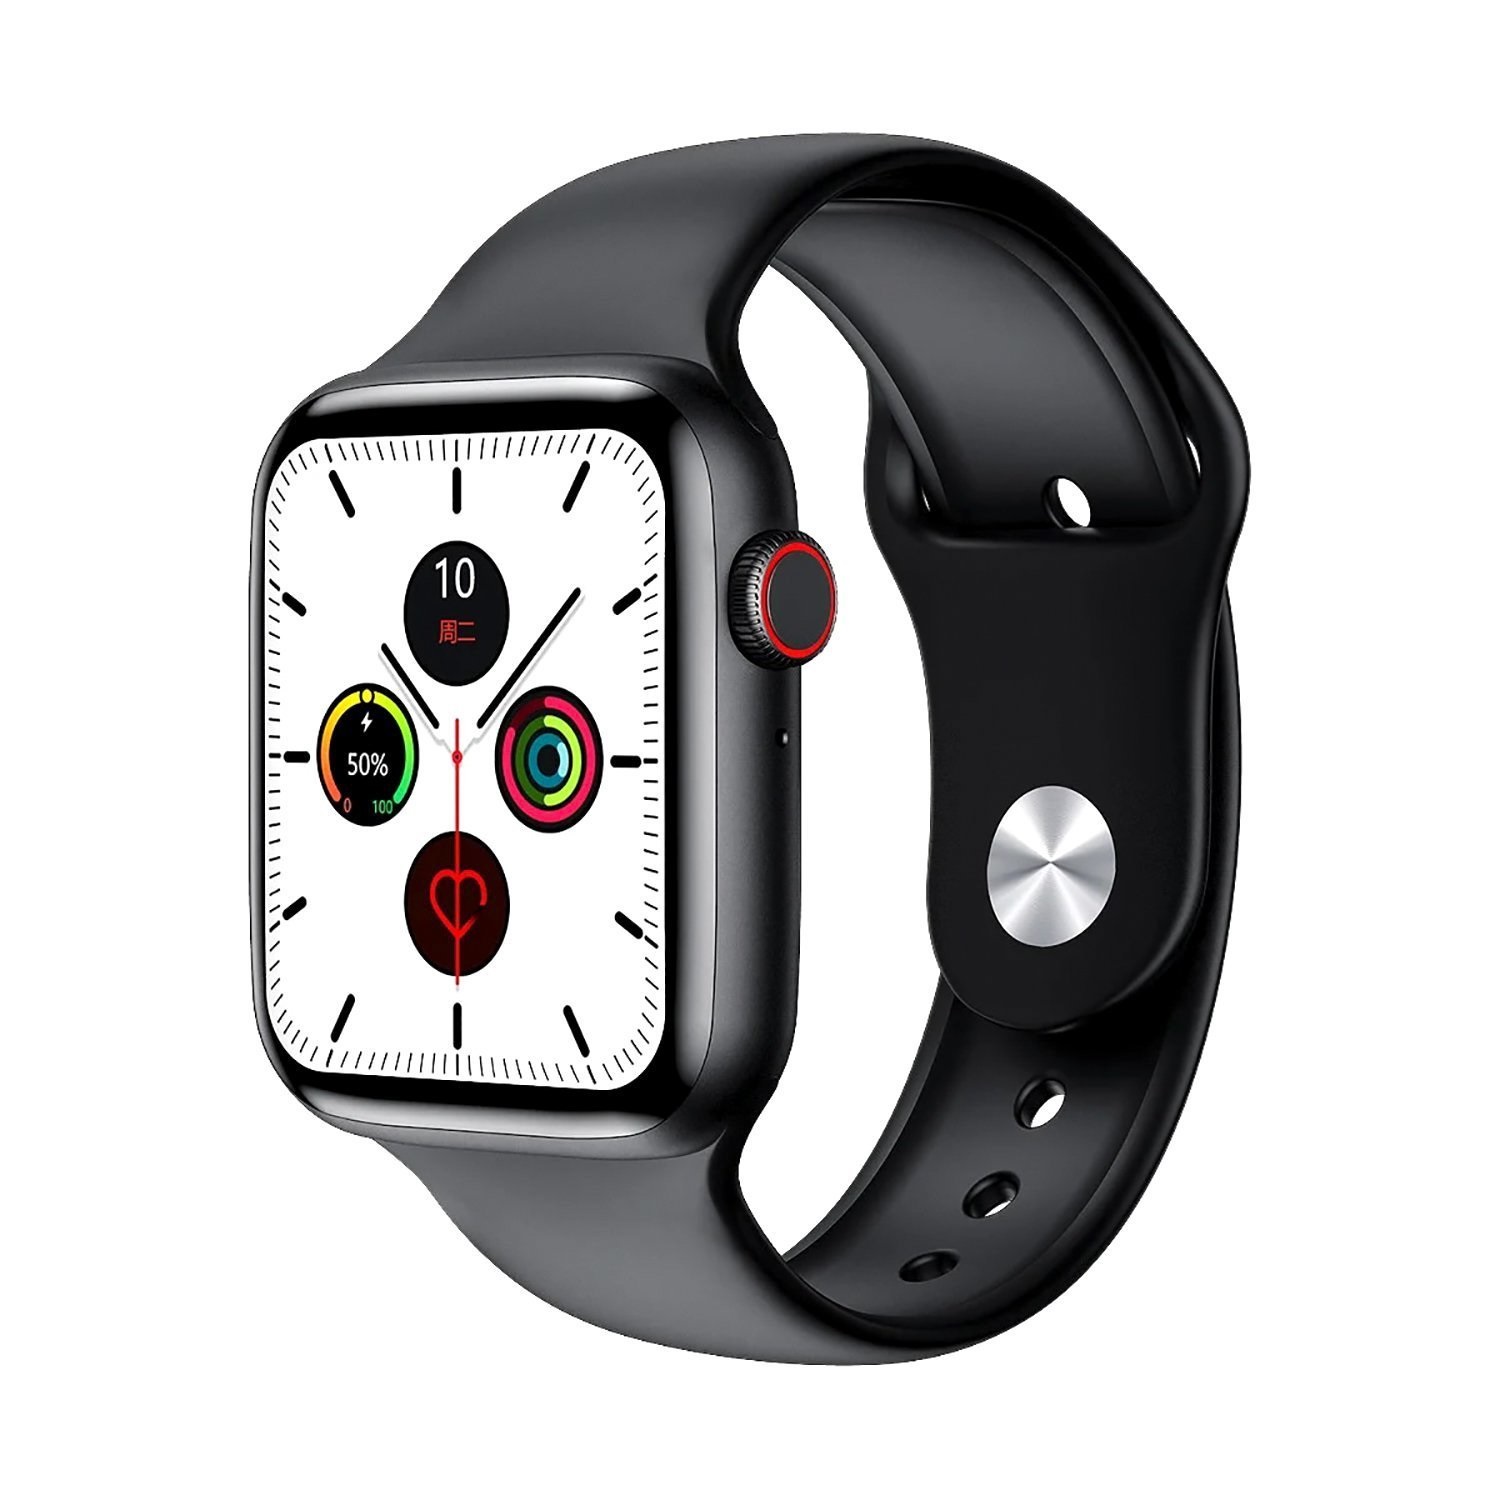 Часы 7 x pro. Смарт часы Iwo w26. Smart watch w26 Plus. Смарт-часы w26+ Black. Эппл вотч 4.